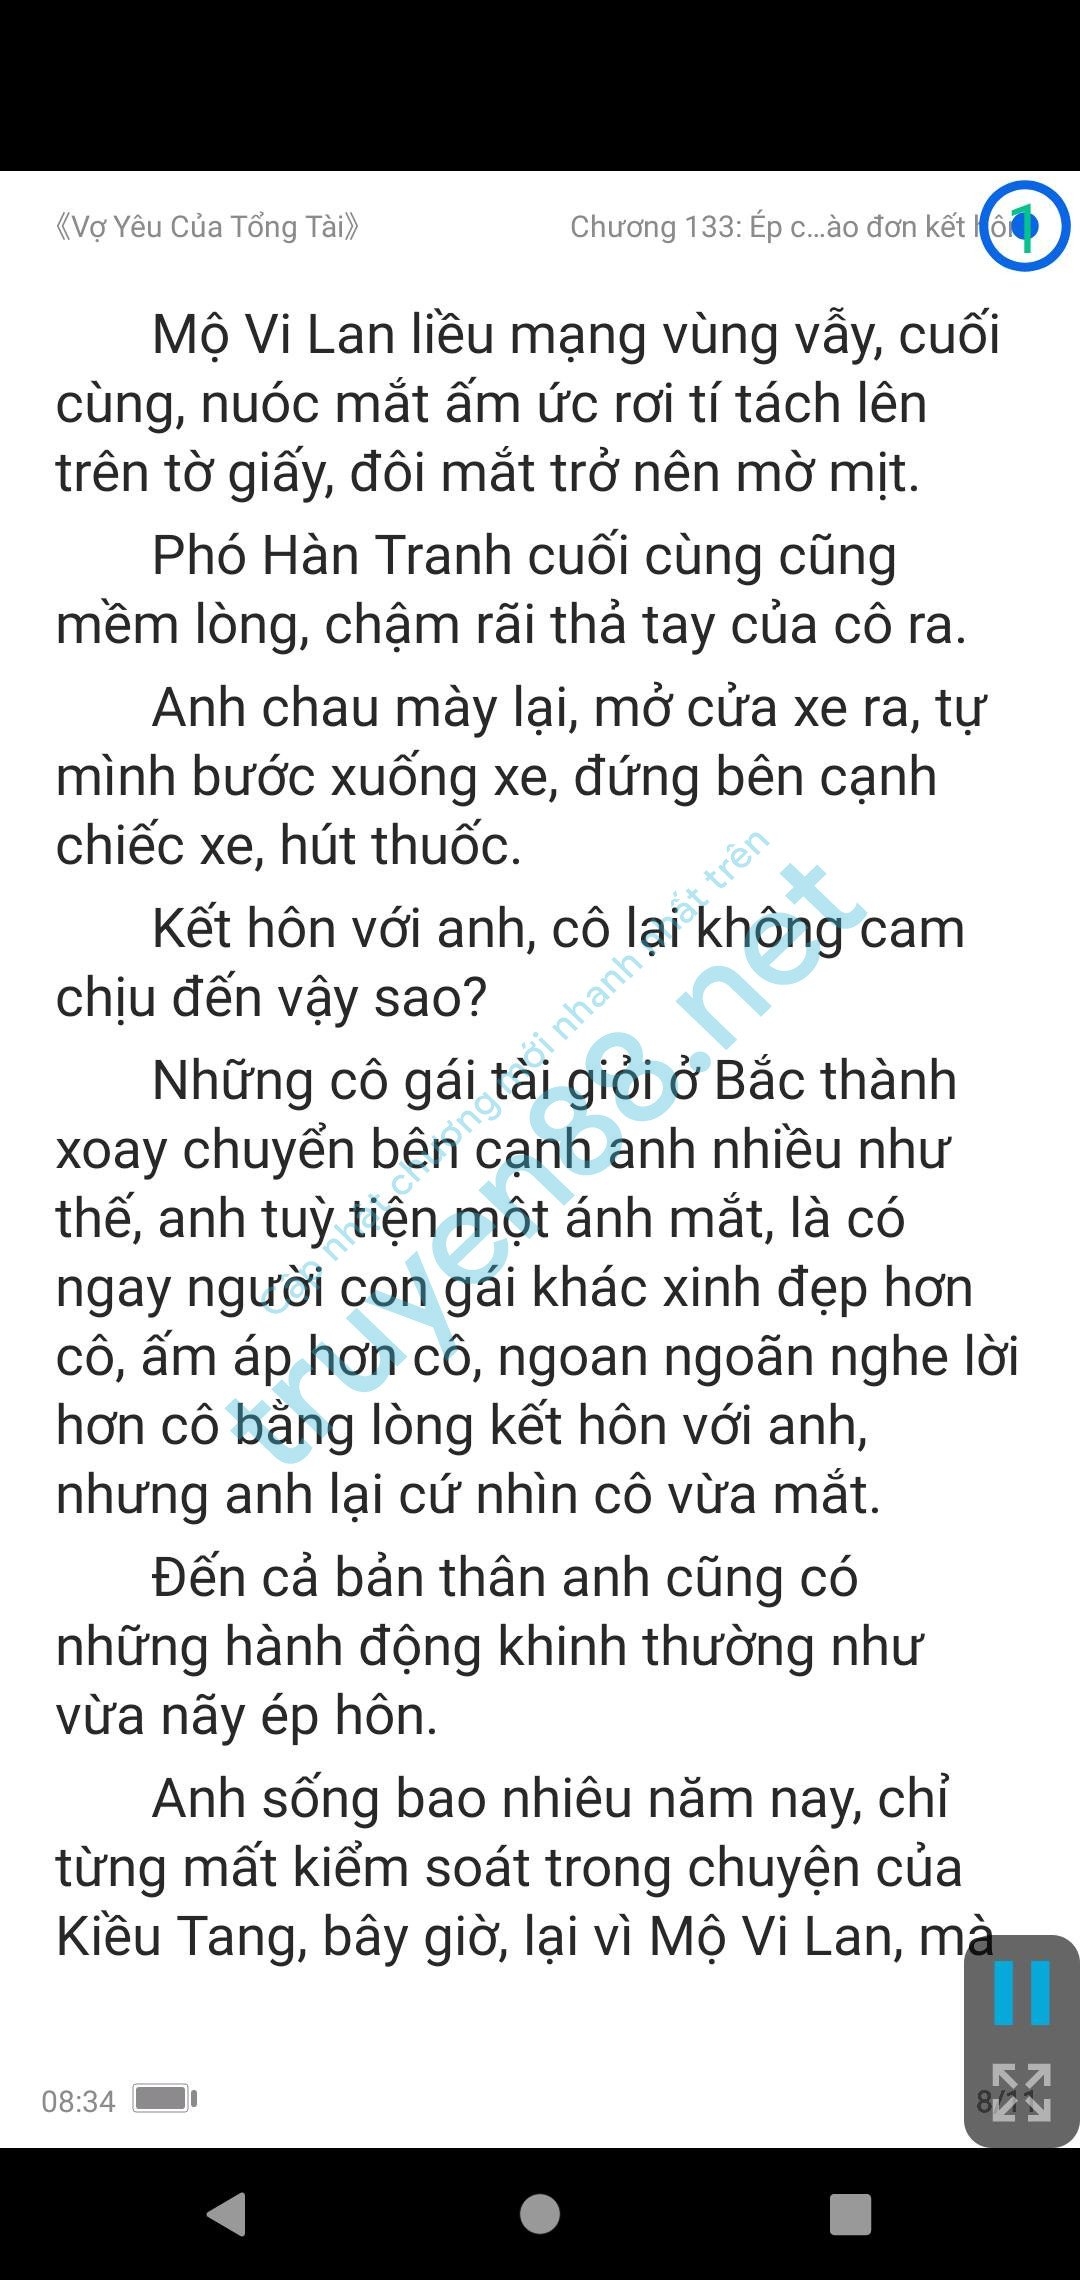 vo-yeu-cua-tong-tai-mo-vi-lan--pho-han-tranh-133-0